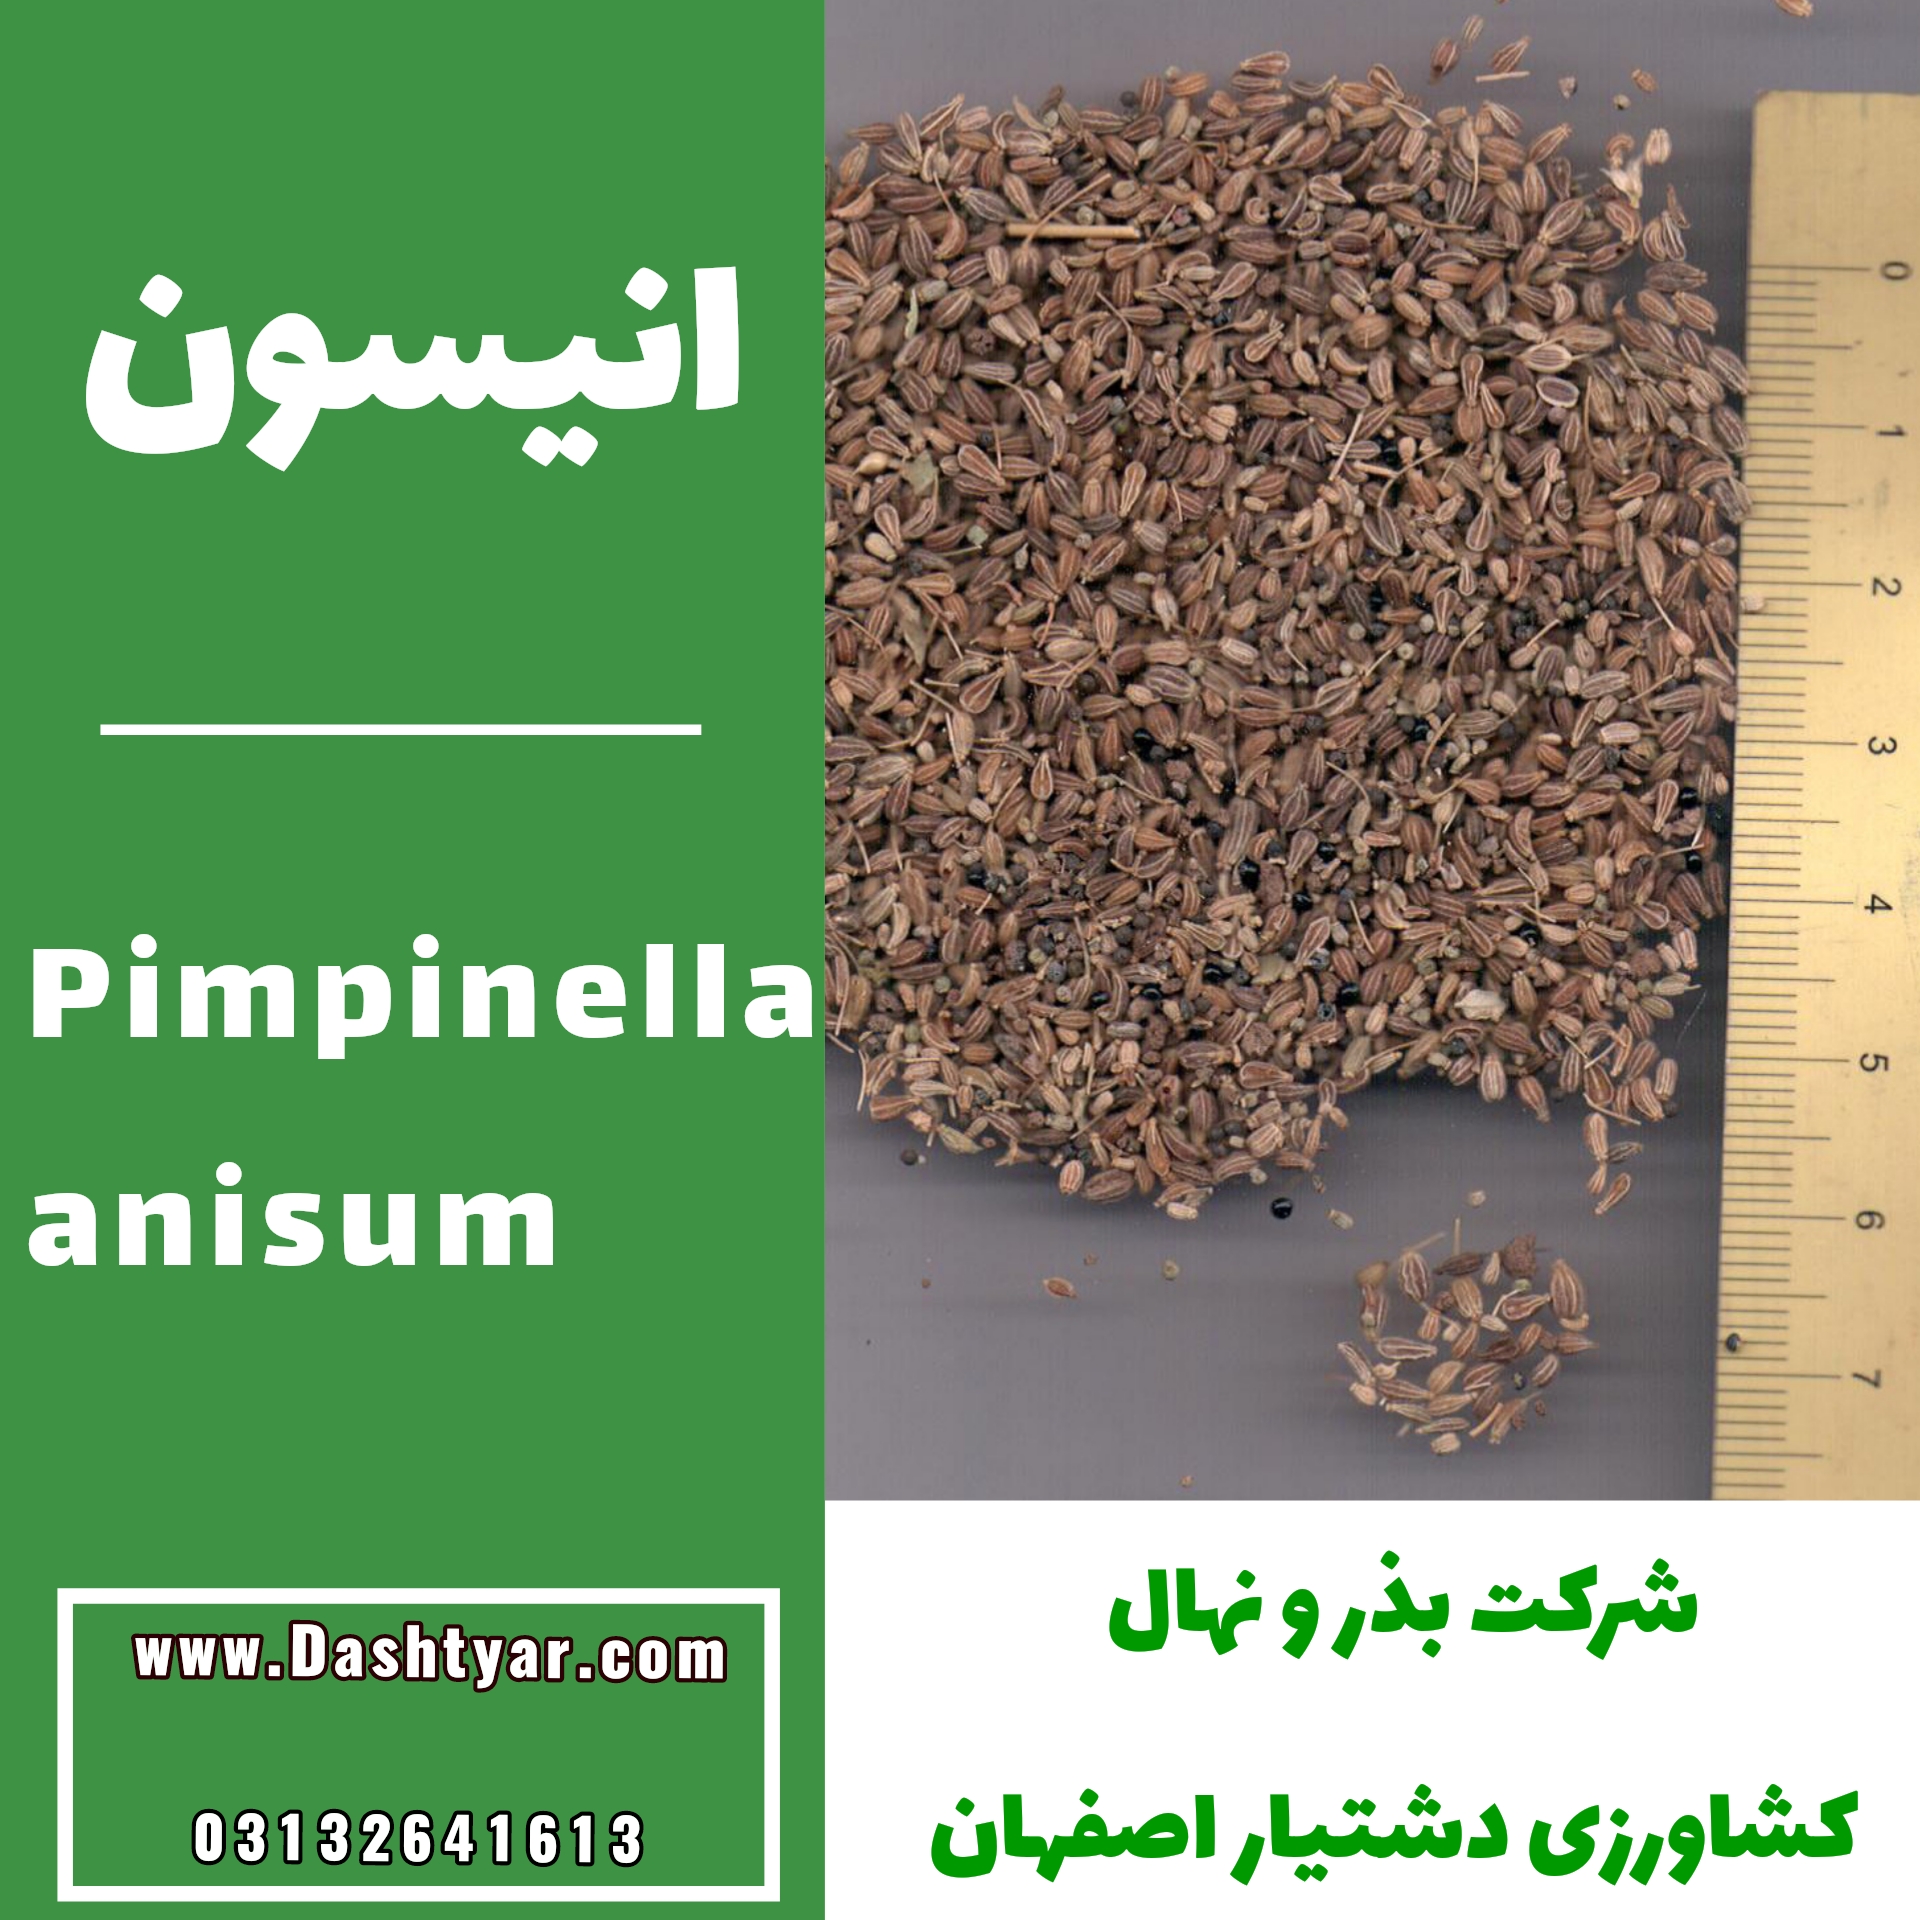 بذر انیسون(Pimpinella anisum)